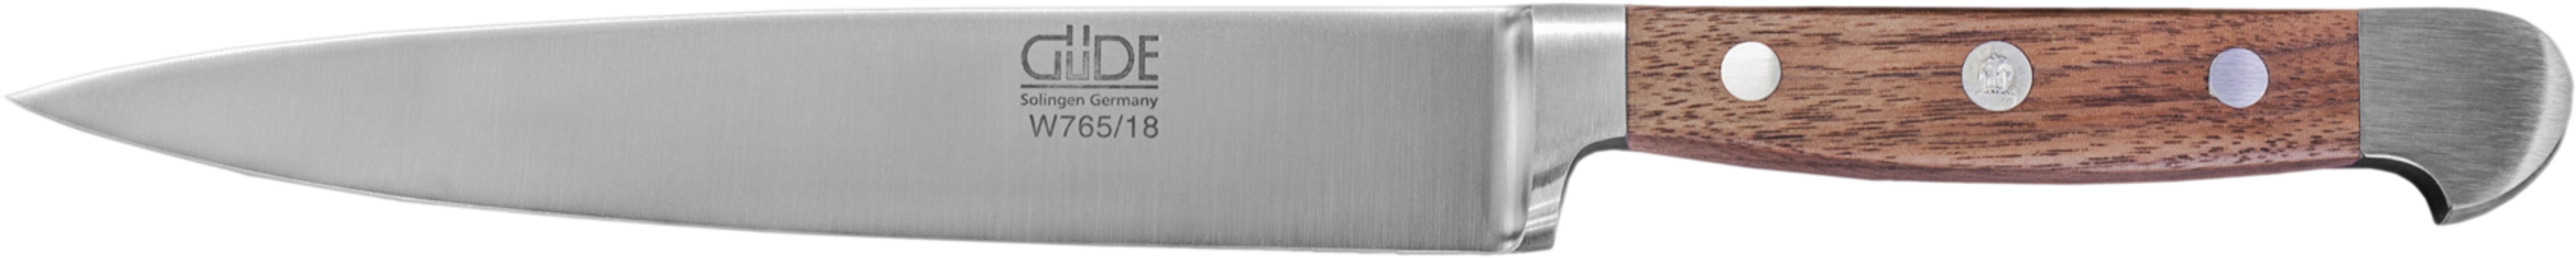 Güde Messer Solingen Filetiermesser Filiermesser, geschmiedet, Serie Alpha Walnuss, Doppelkropf, Griff Walnussholz- No. W765/18